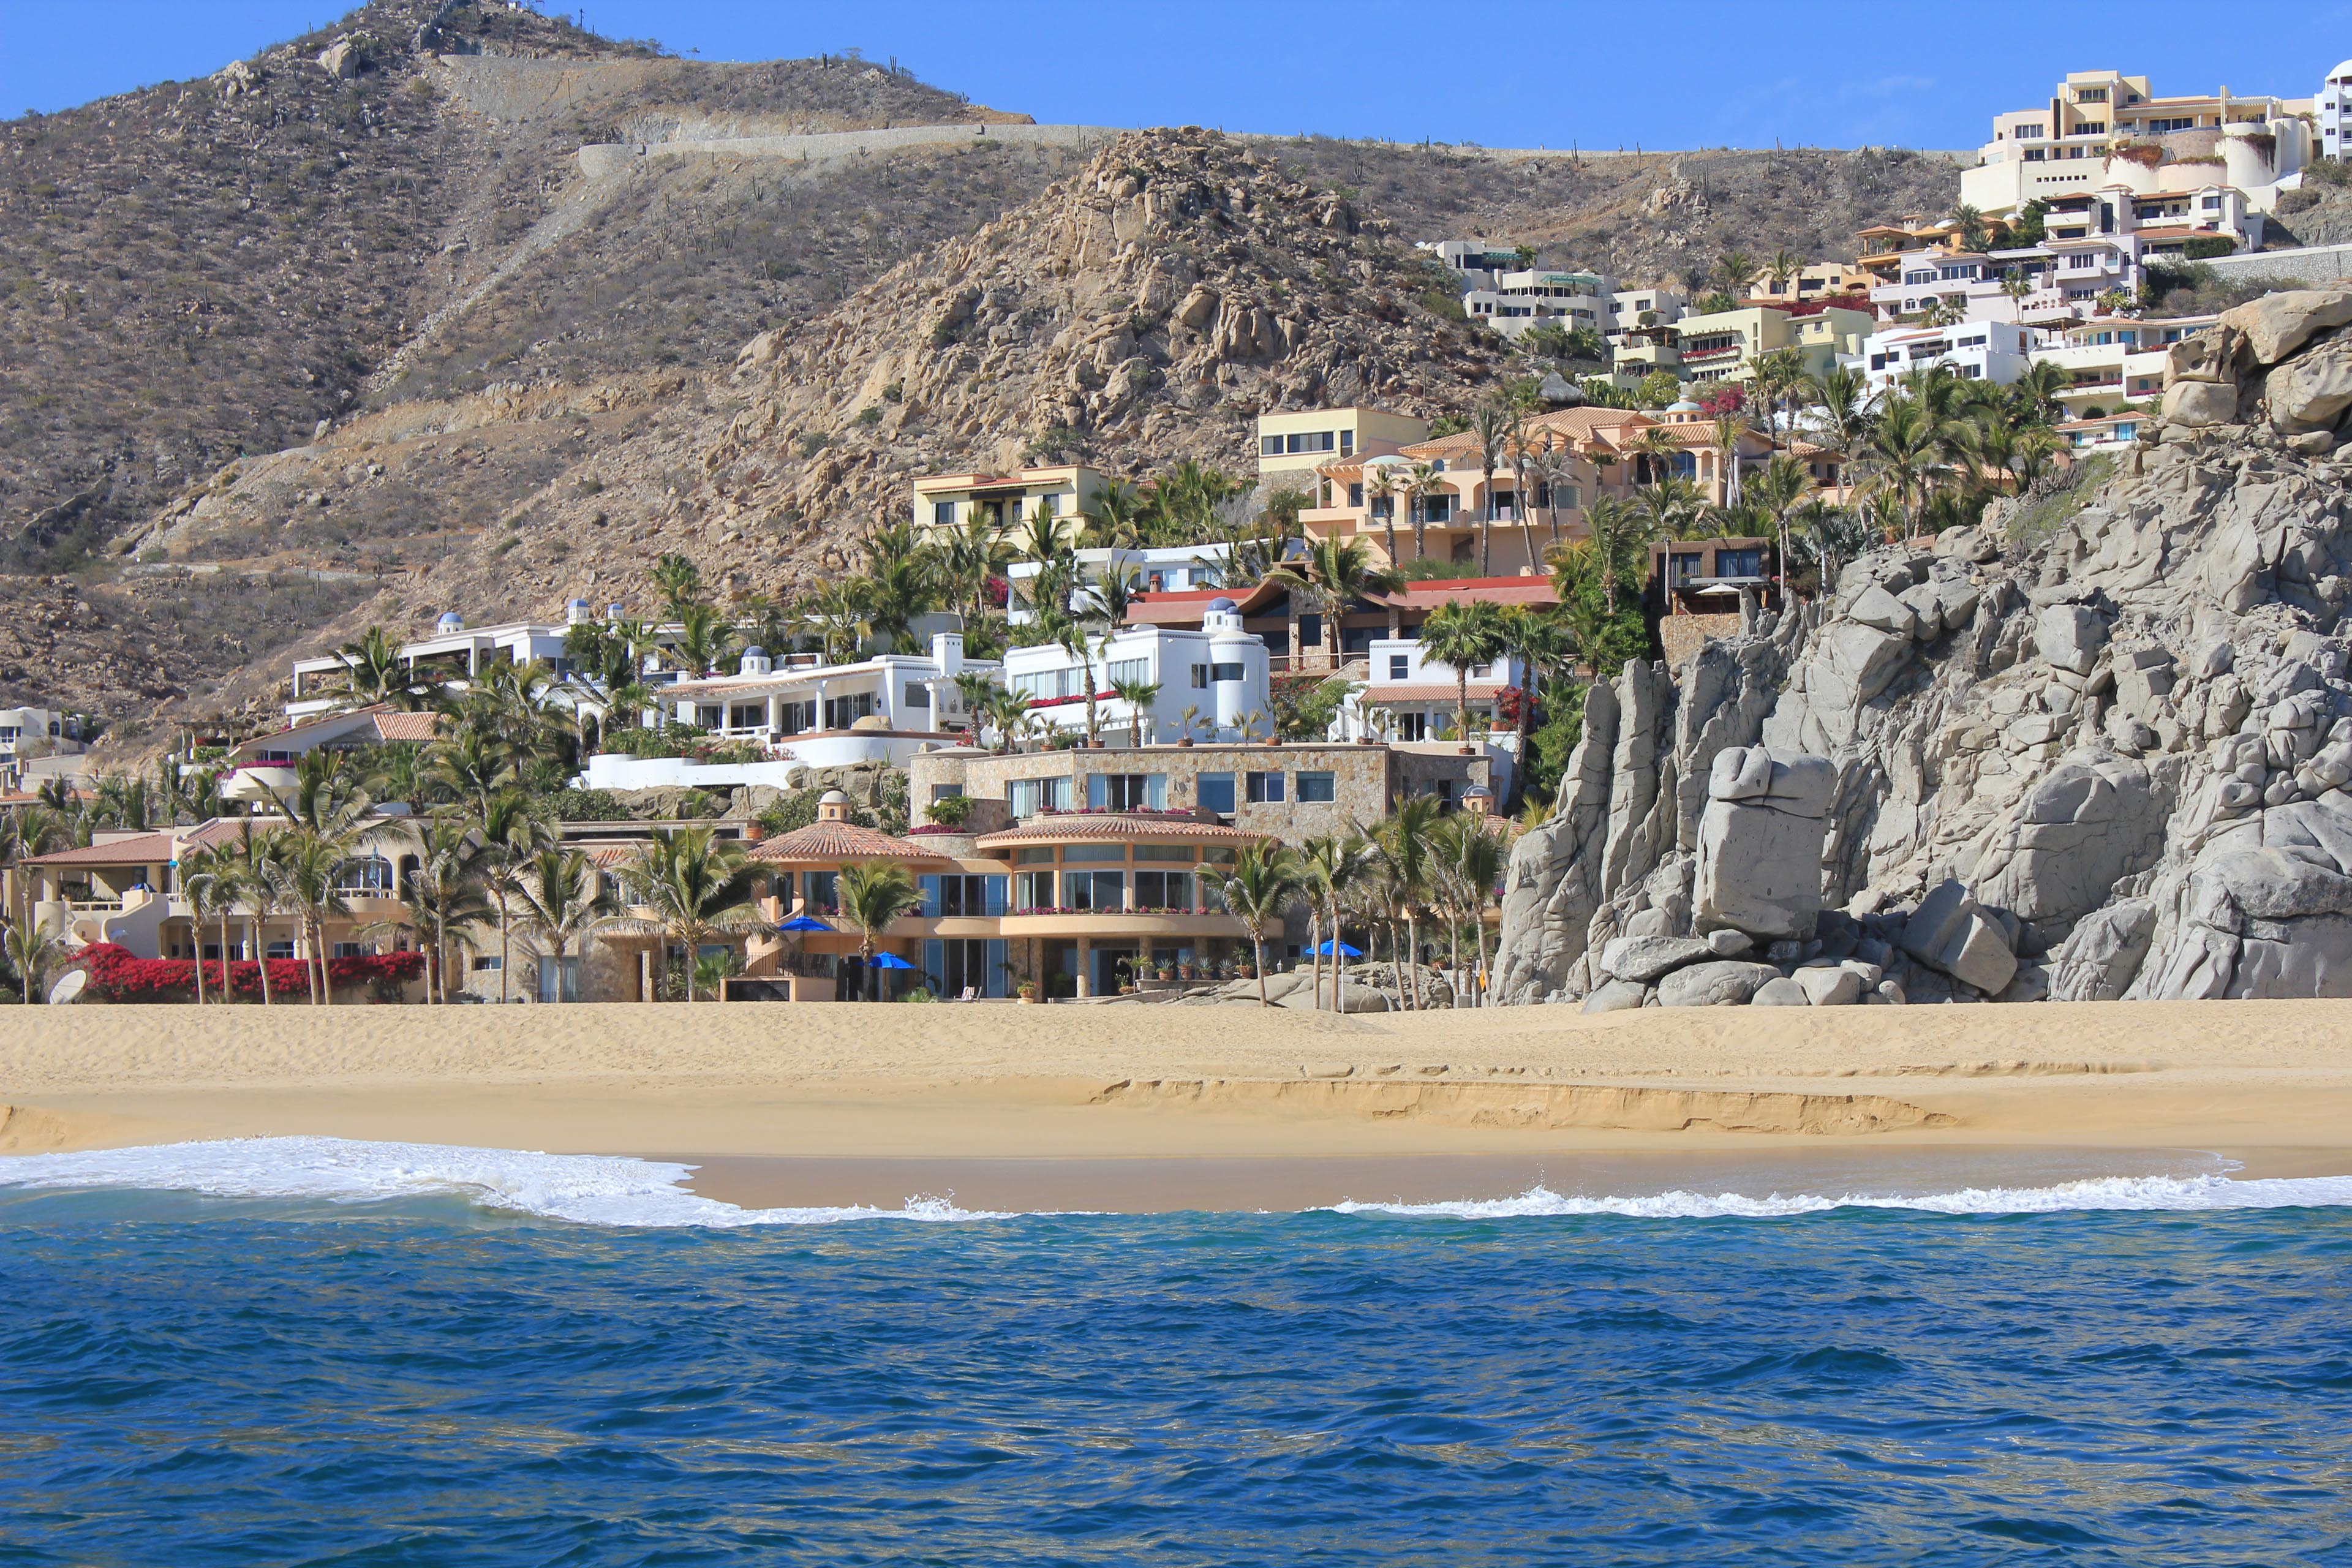 Visit Pedregal: 2023 Pedregal, Cabo San Lucas Travel Guide